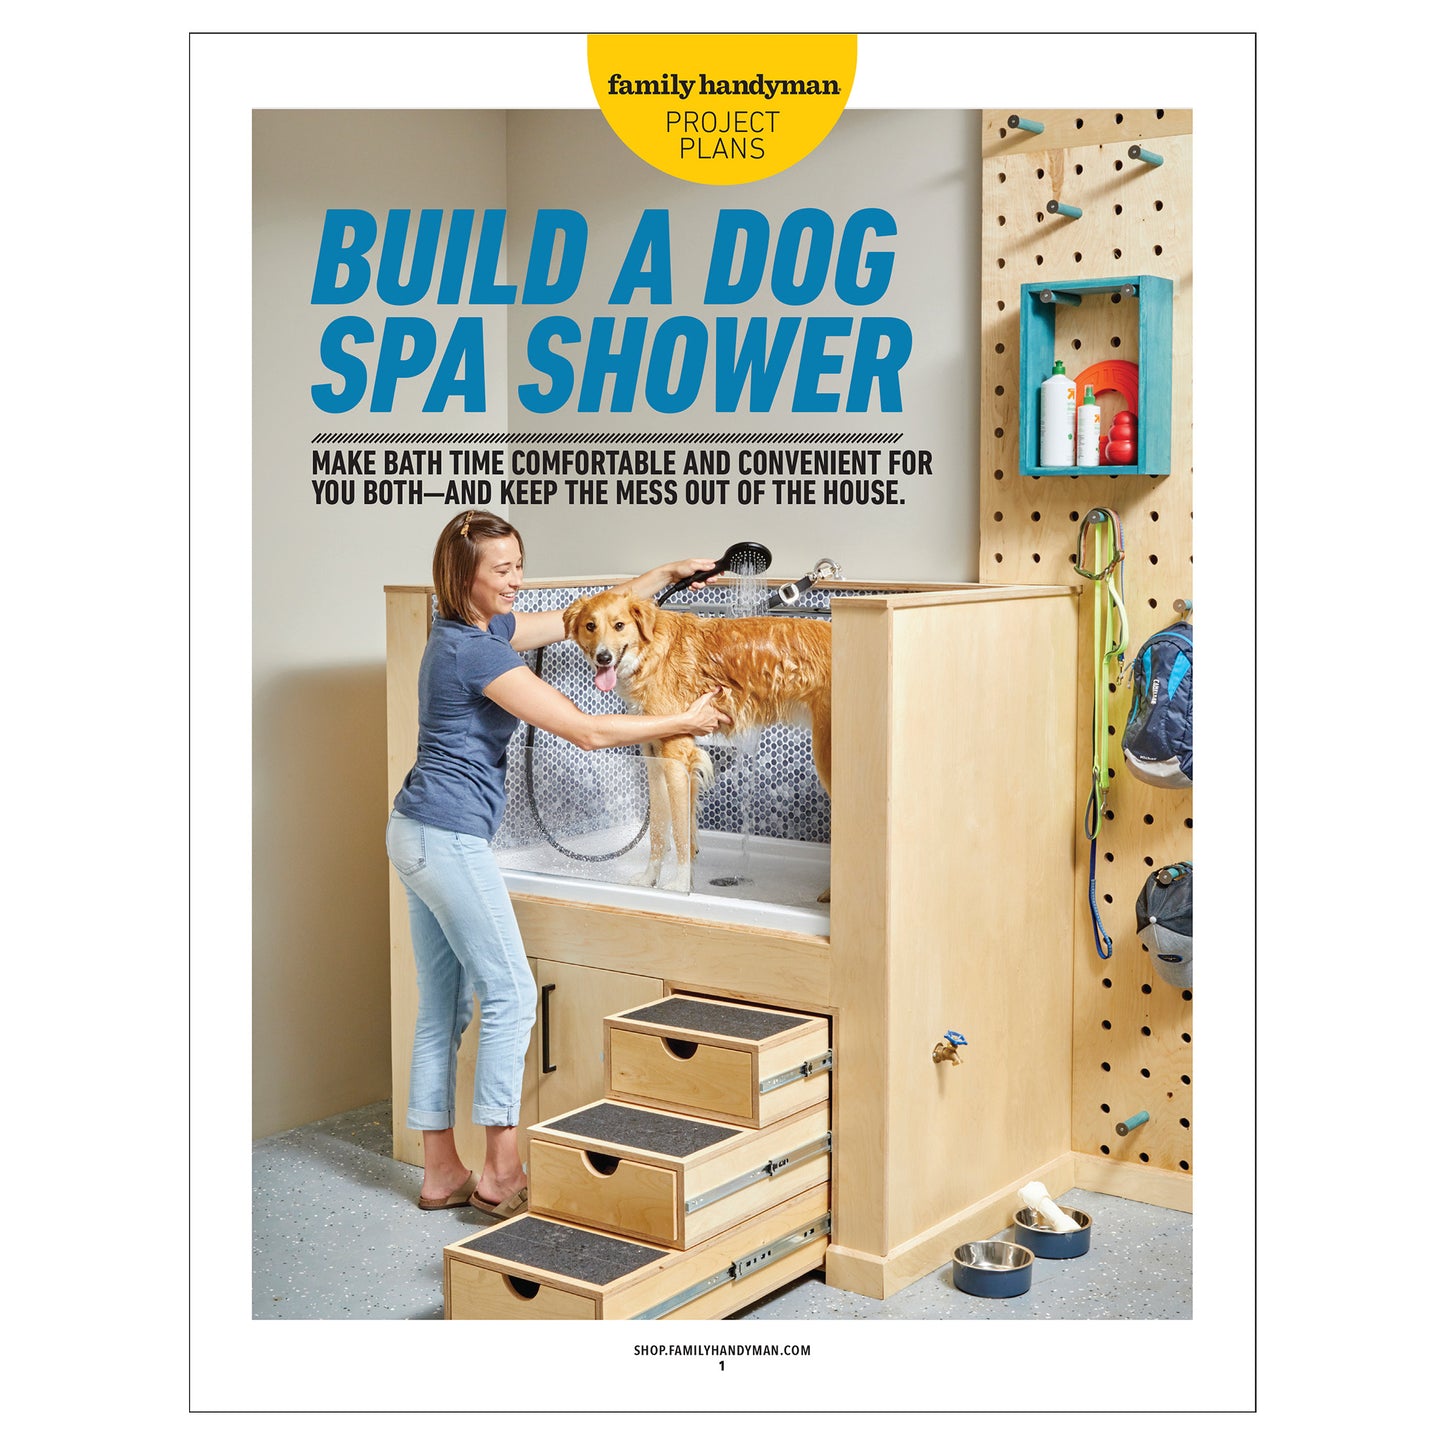 Build a Dog Spa Shower